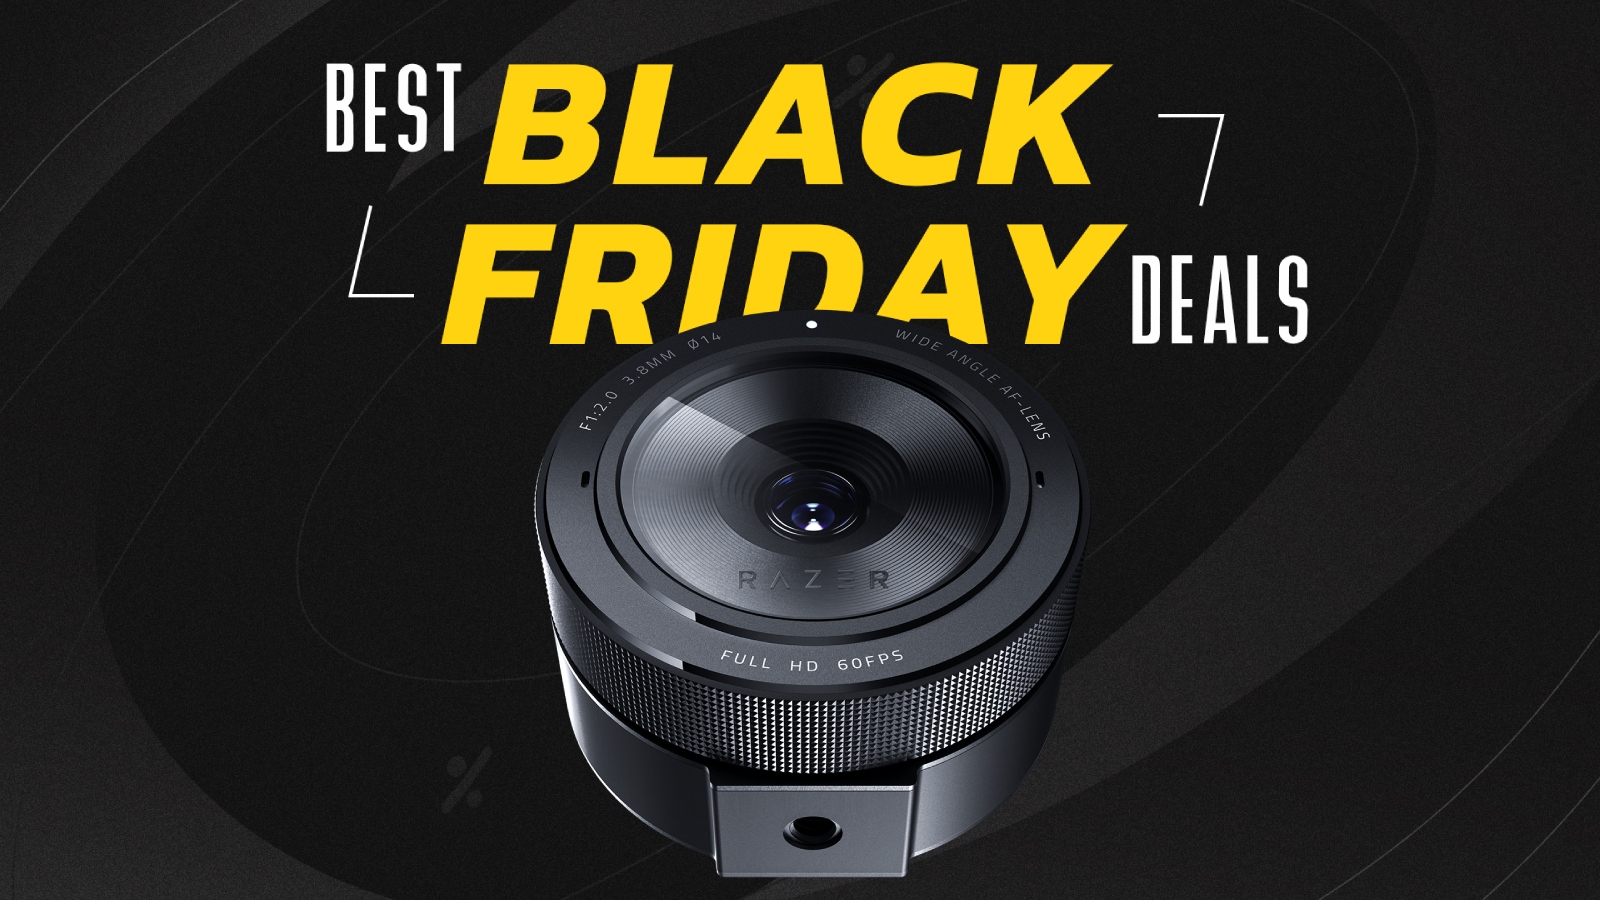 The Razer Kiyo Pro webcam is $140 off for Cyber Monday